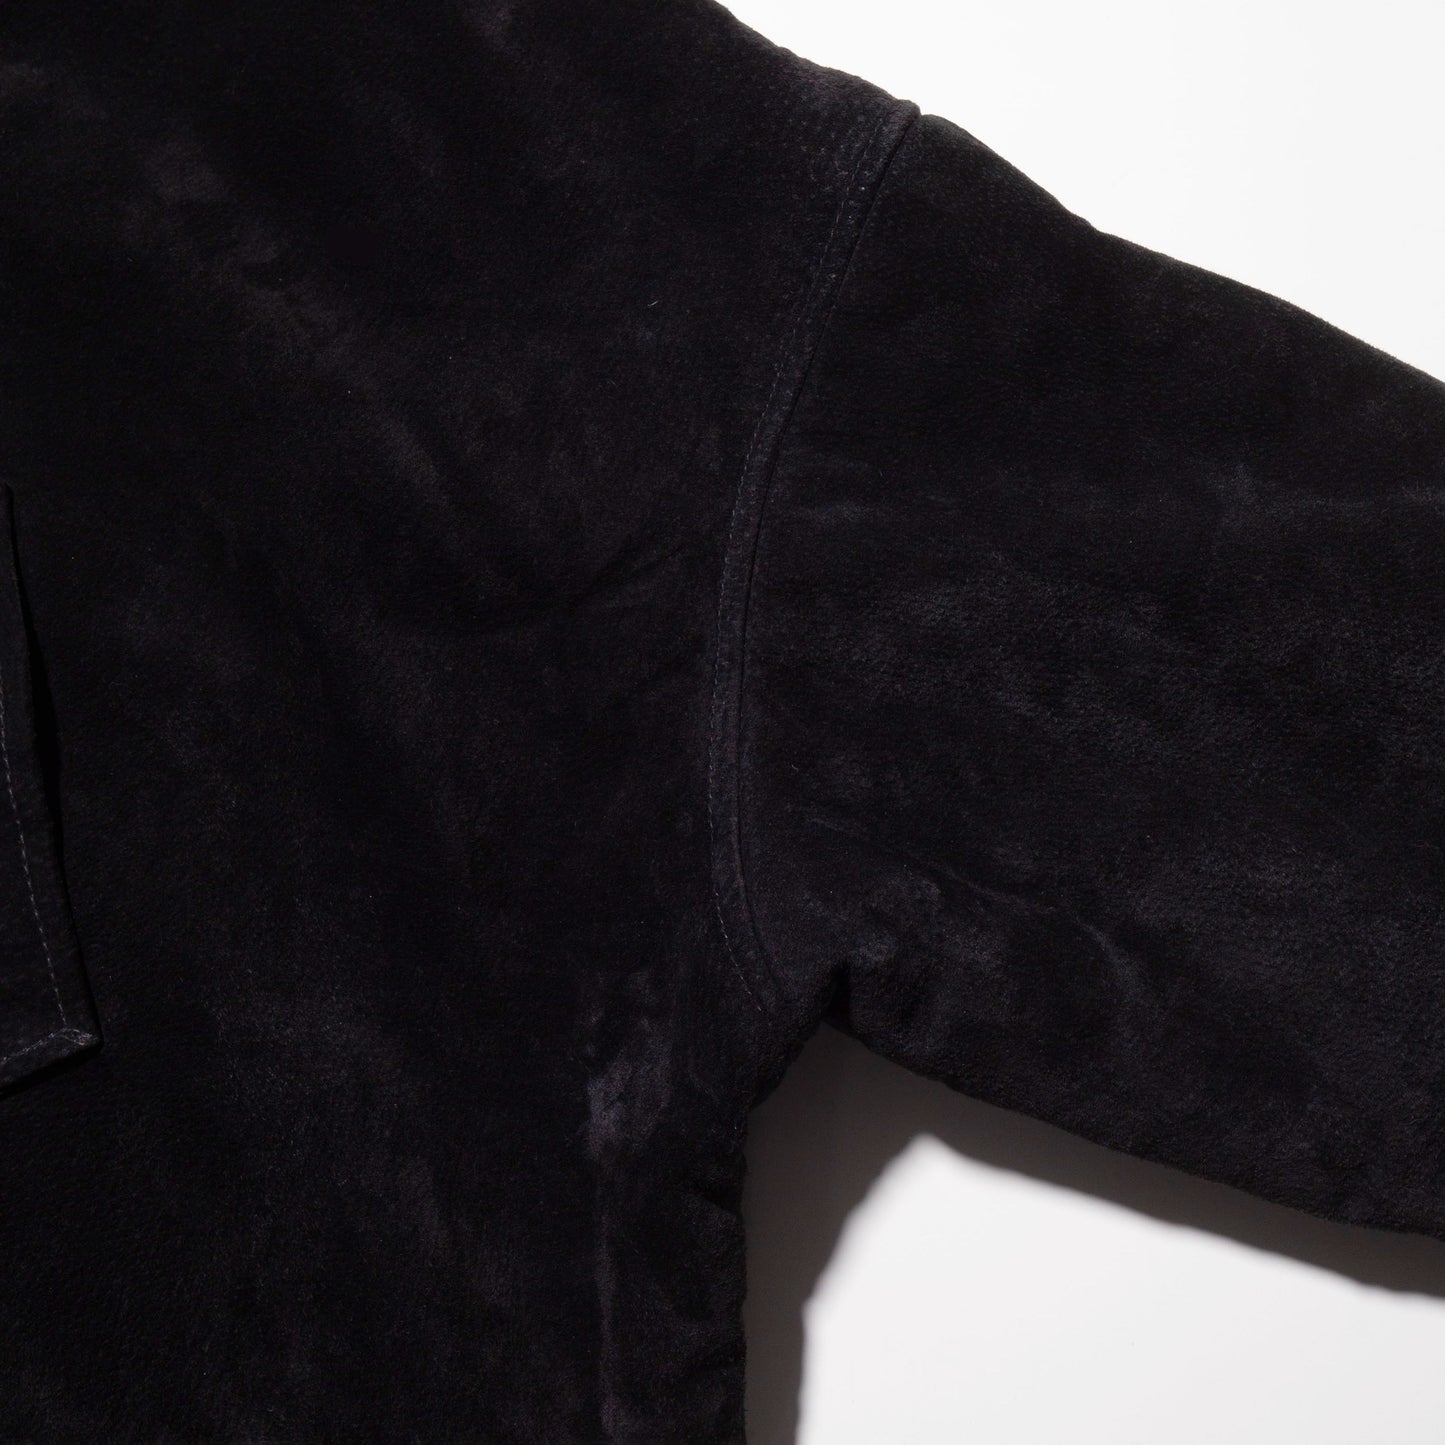 vintage hooked suede leather/fur jacket , detachable hood